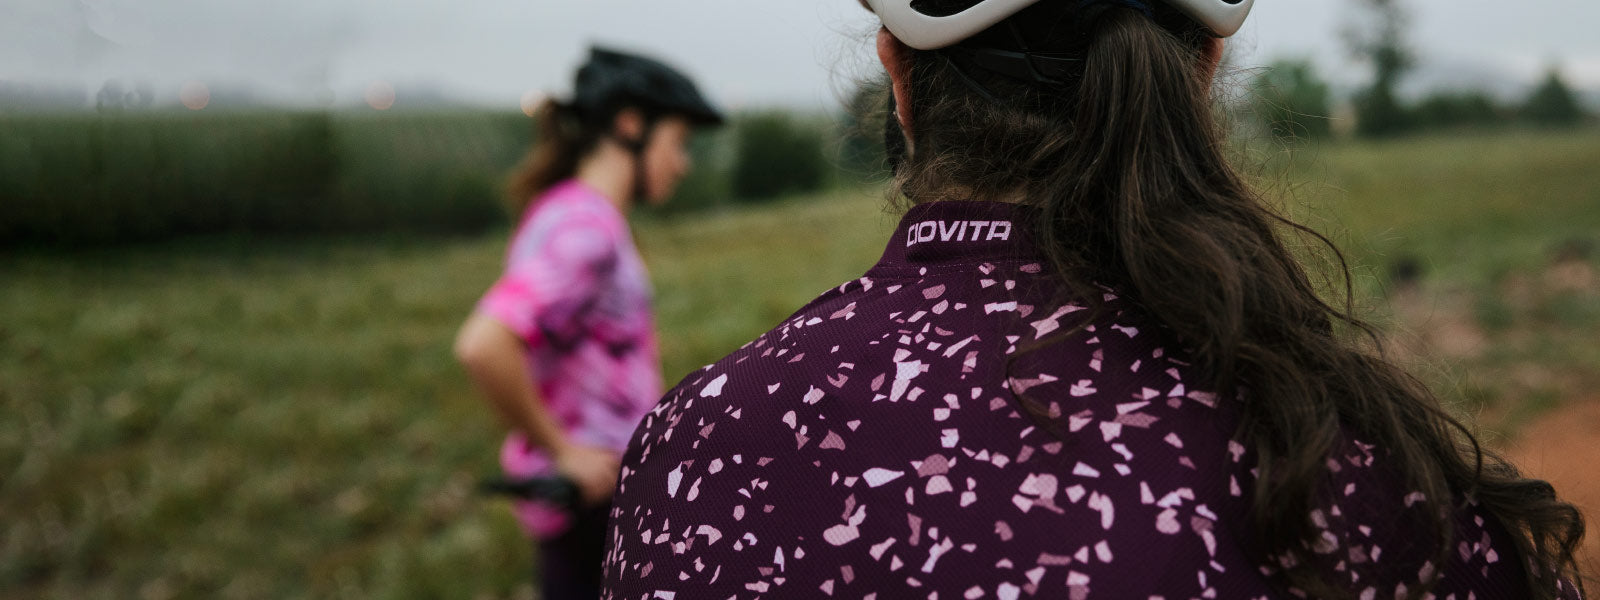 Women's Corsa Cycling Jerseys